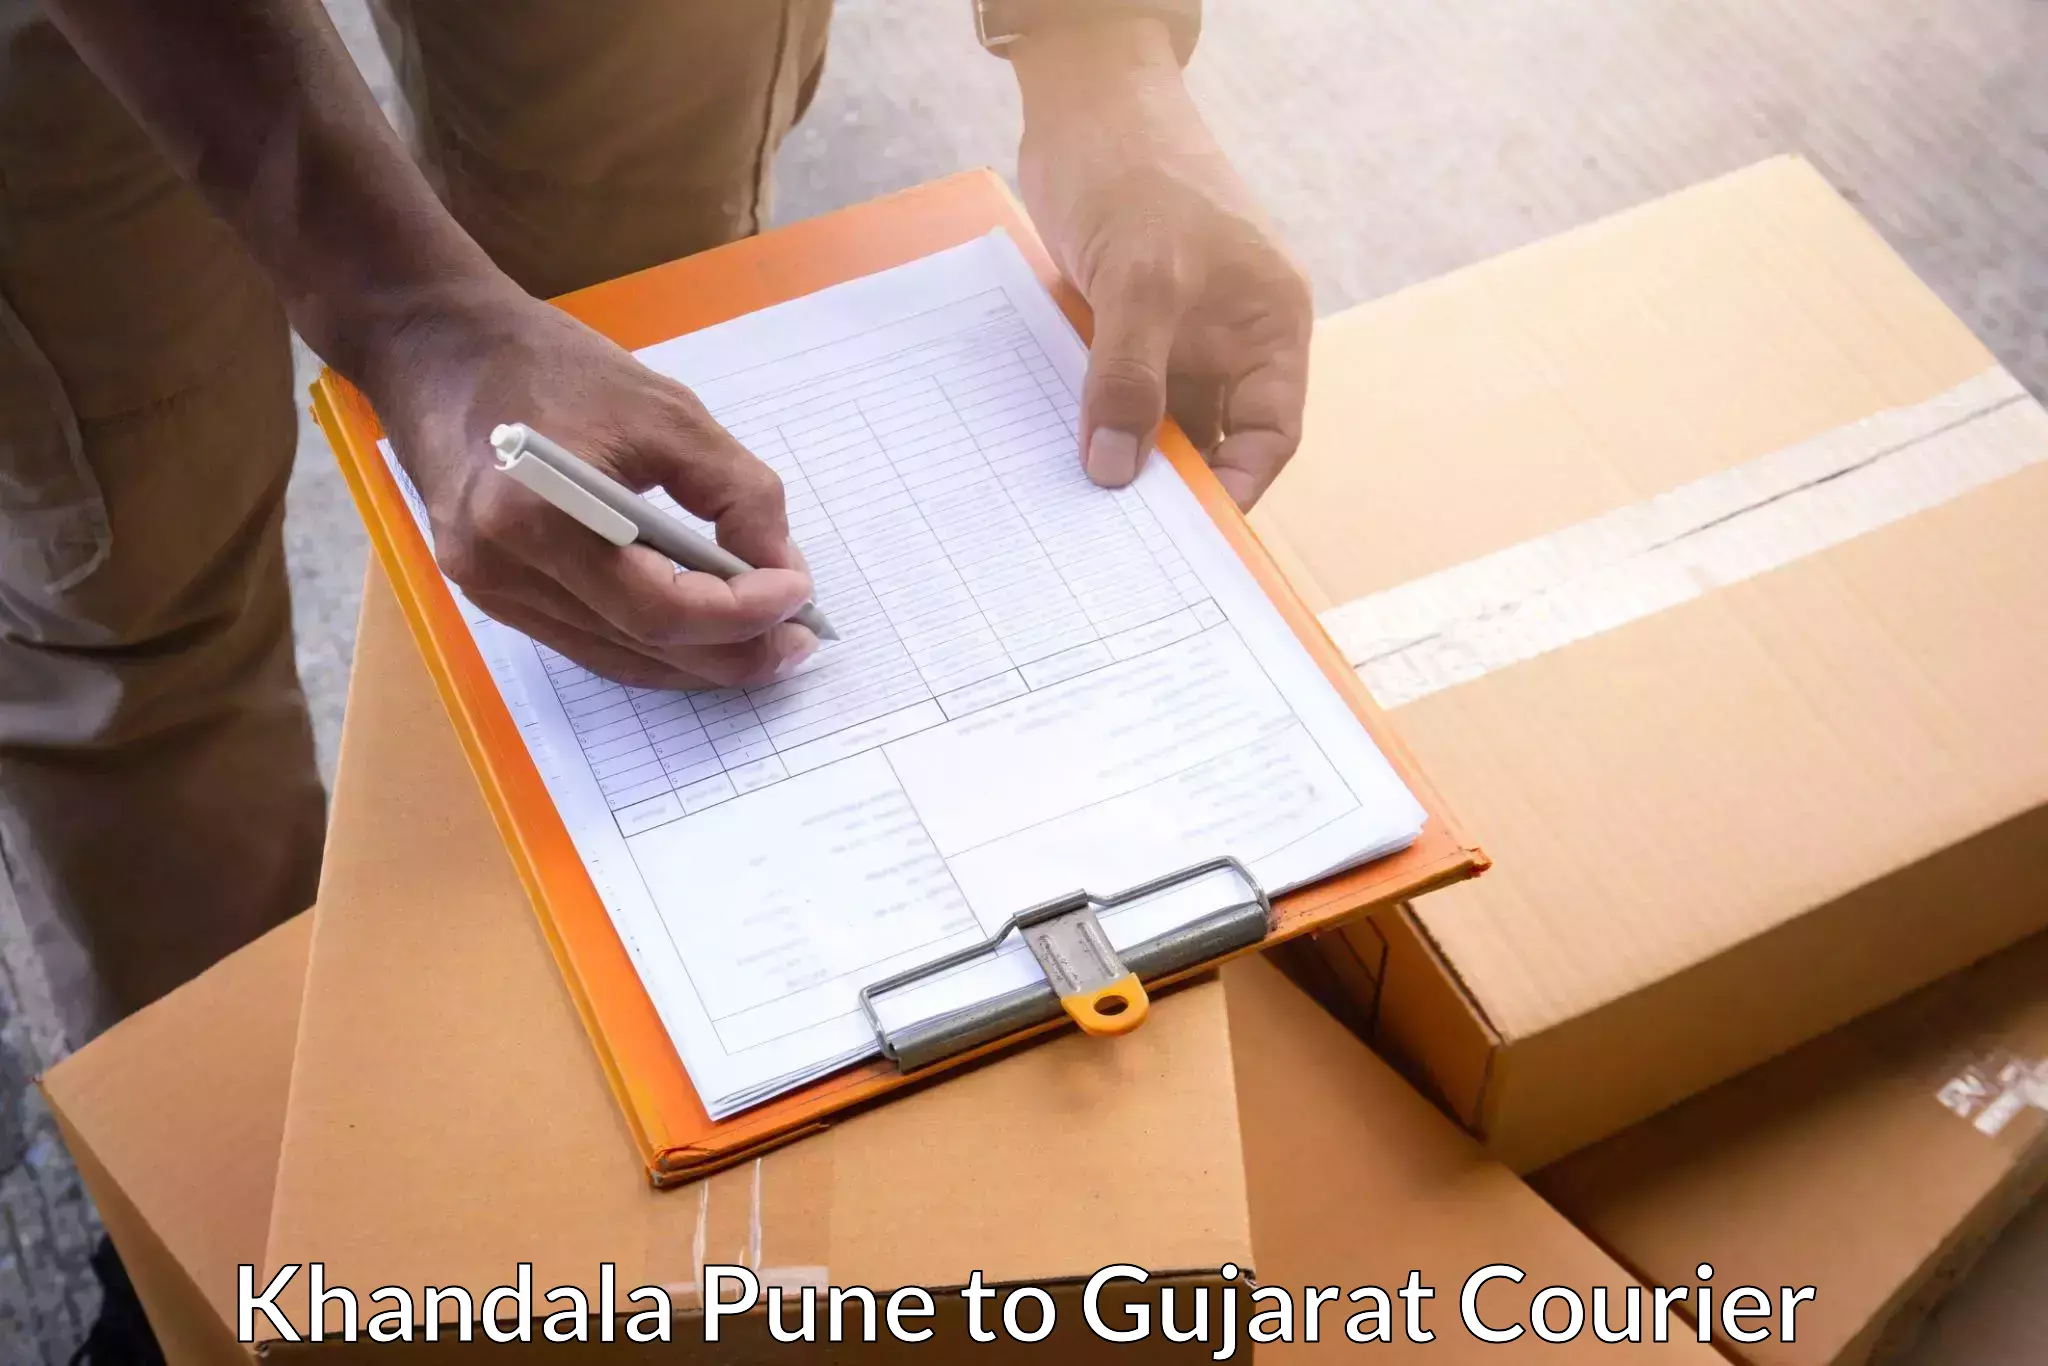 State-of-the-art courier technology Khandala Pune to Navsari